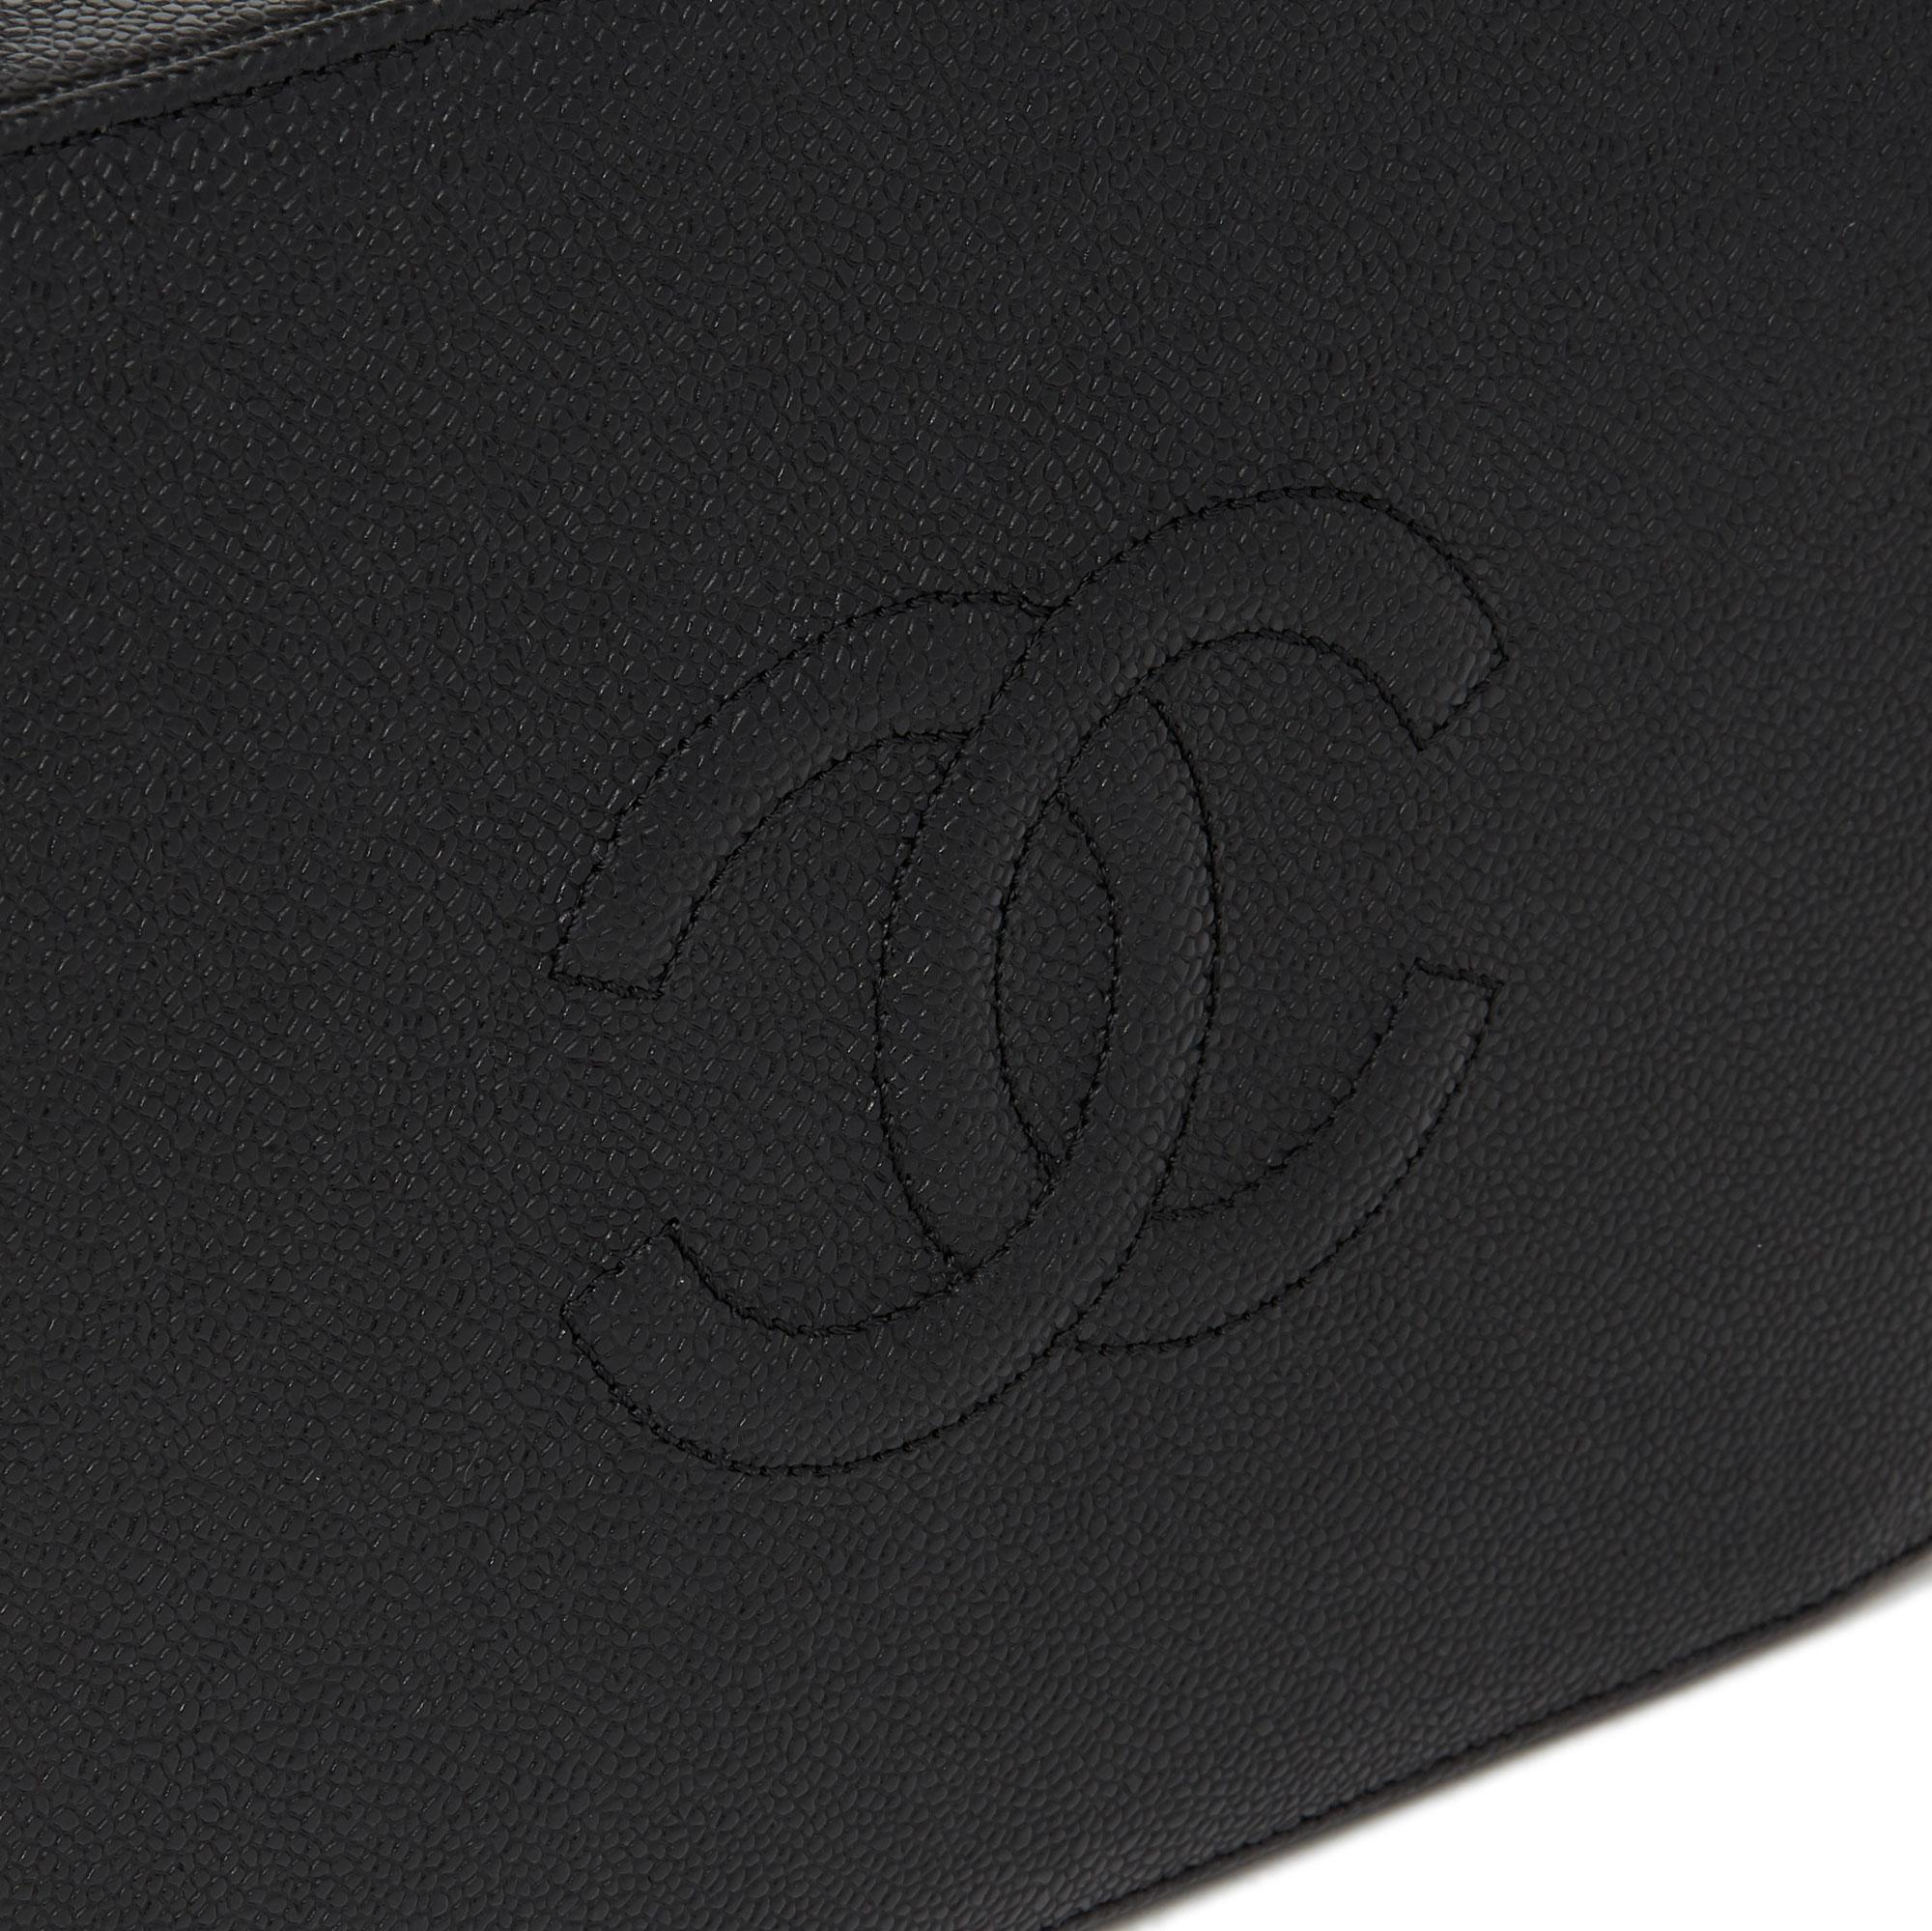 1996 Chanel Black Caviar Leather Vintage Timeless Vanity Case 3